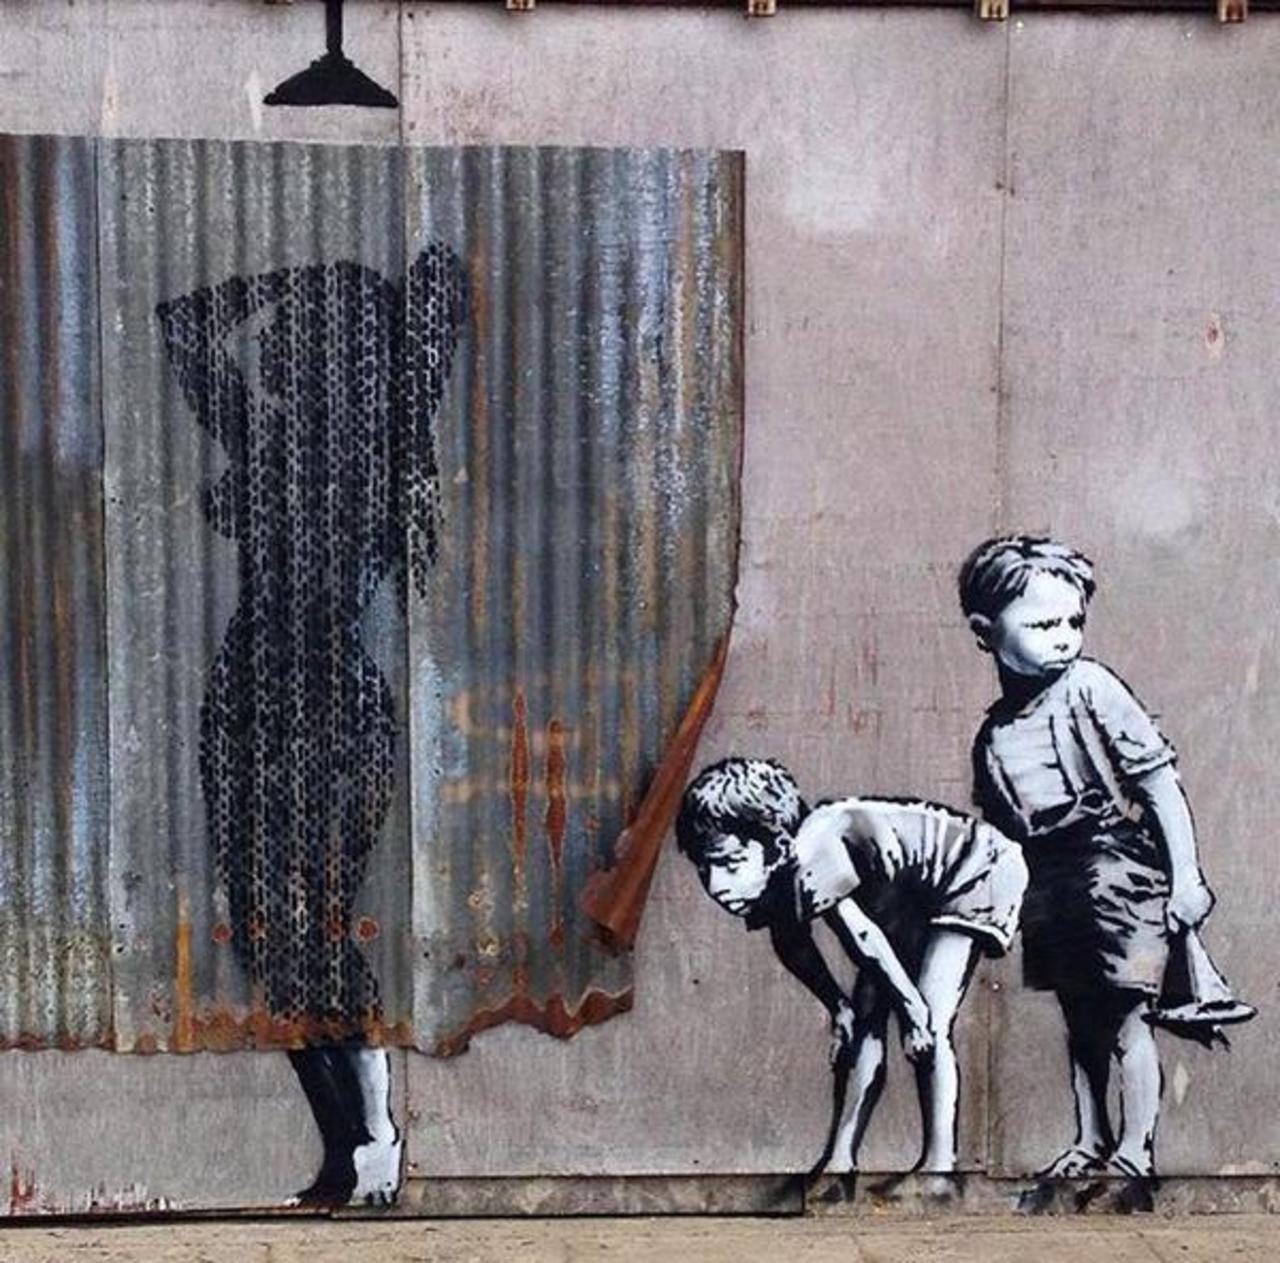 RT @PlayTheMove: New Street Art in Dismaland by Banksy
#streetart #banksy #art #graffiti #FreedomOfArt http://goo.gl/Kqrq6S http://t.co/hdxKCWrmjf